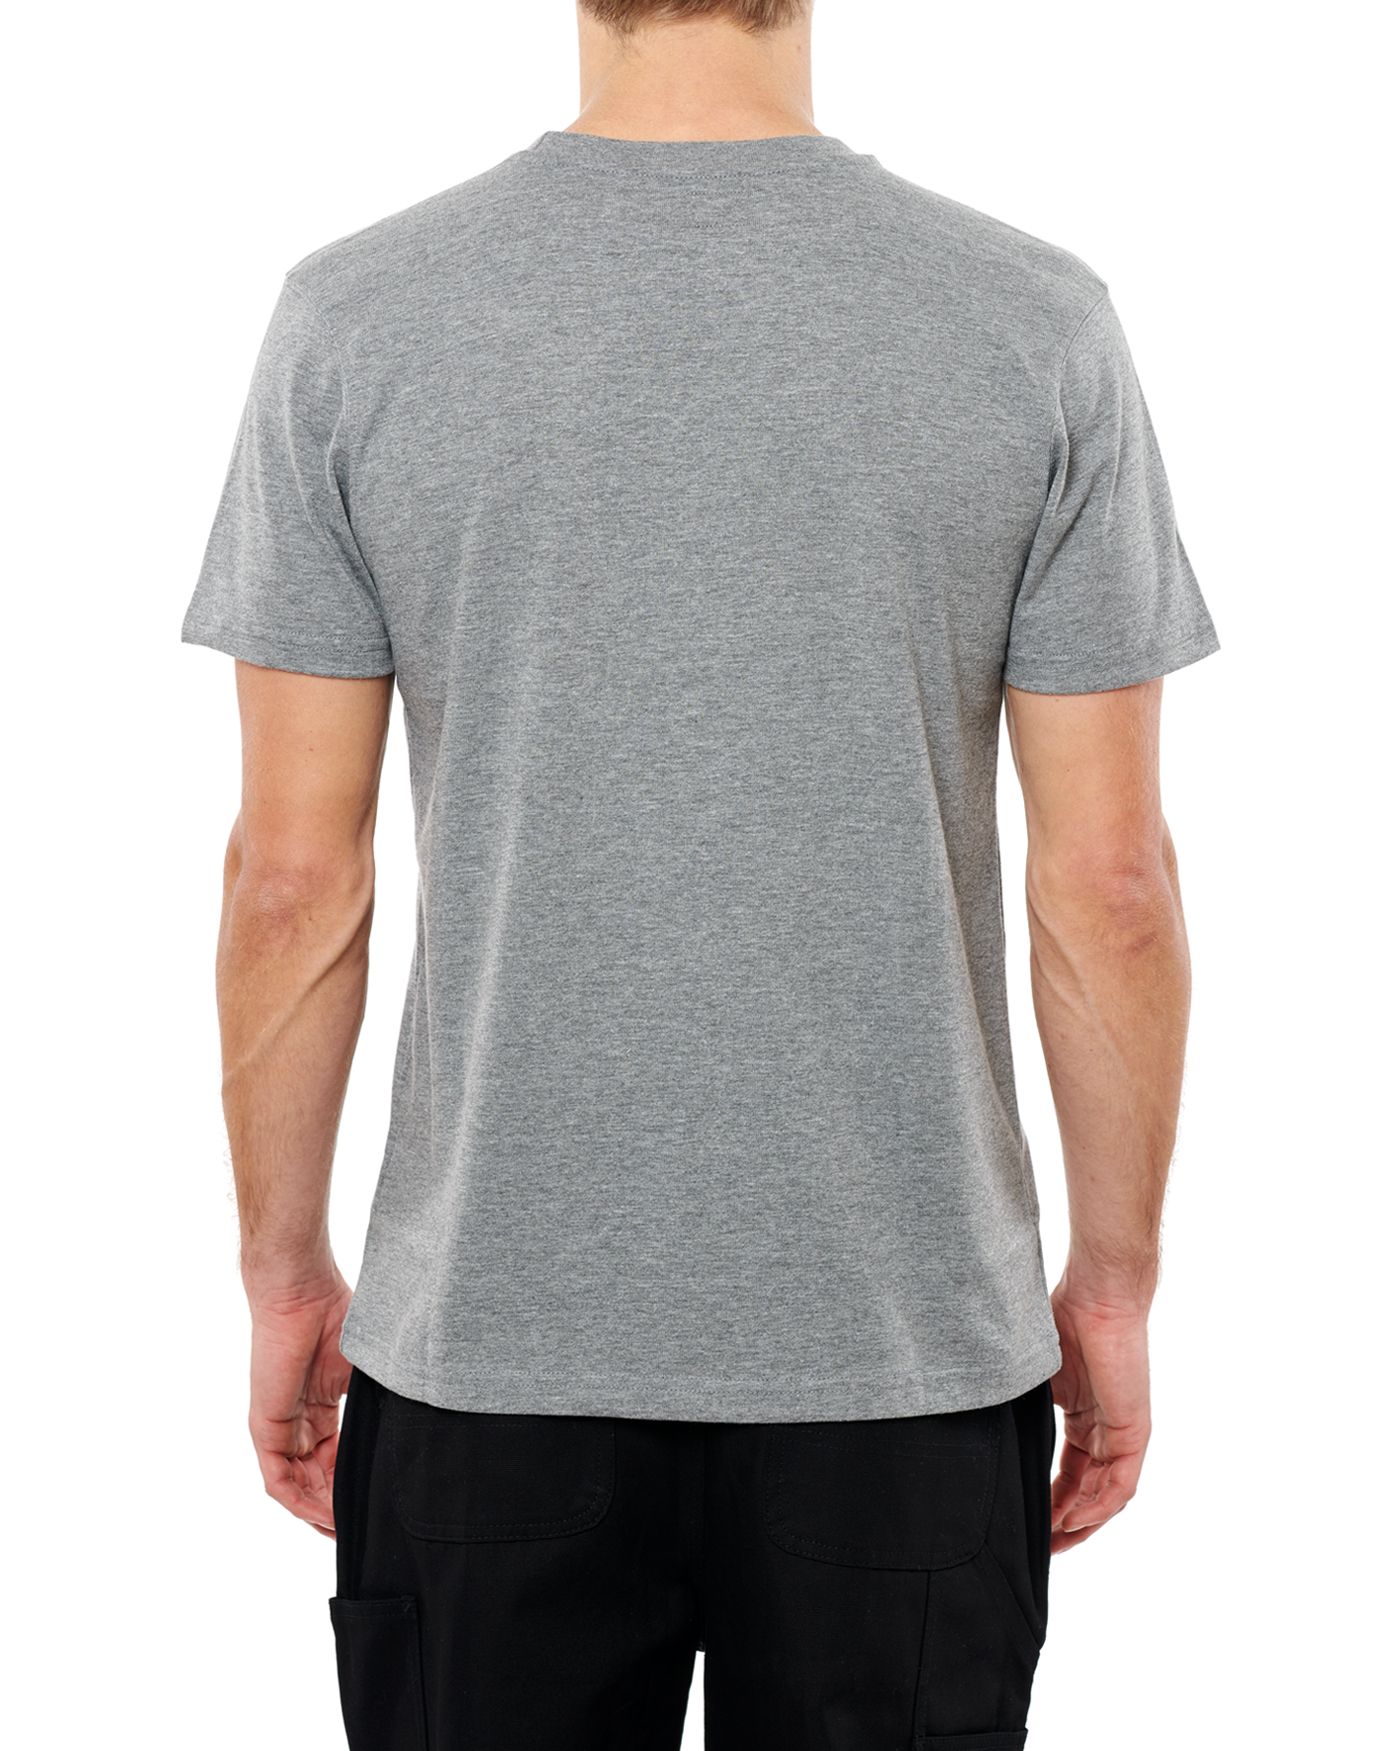 Photo of Better Days S/S T-shirt, Grey Melange